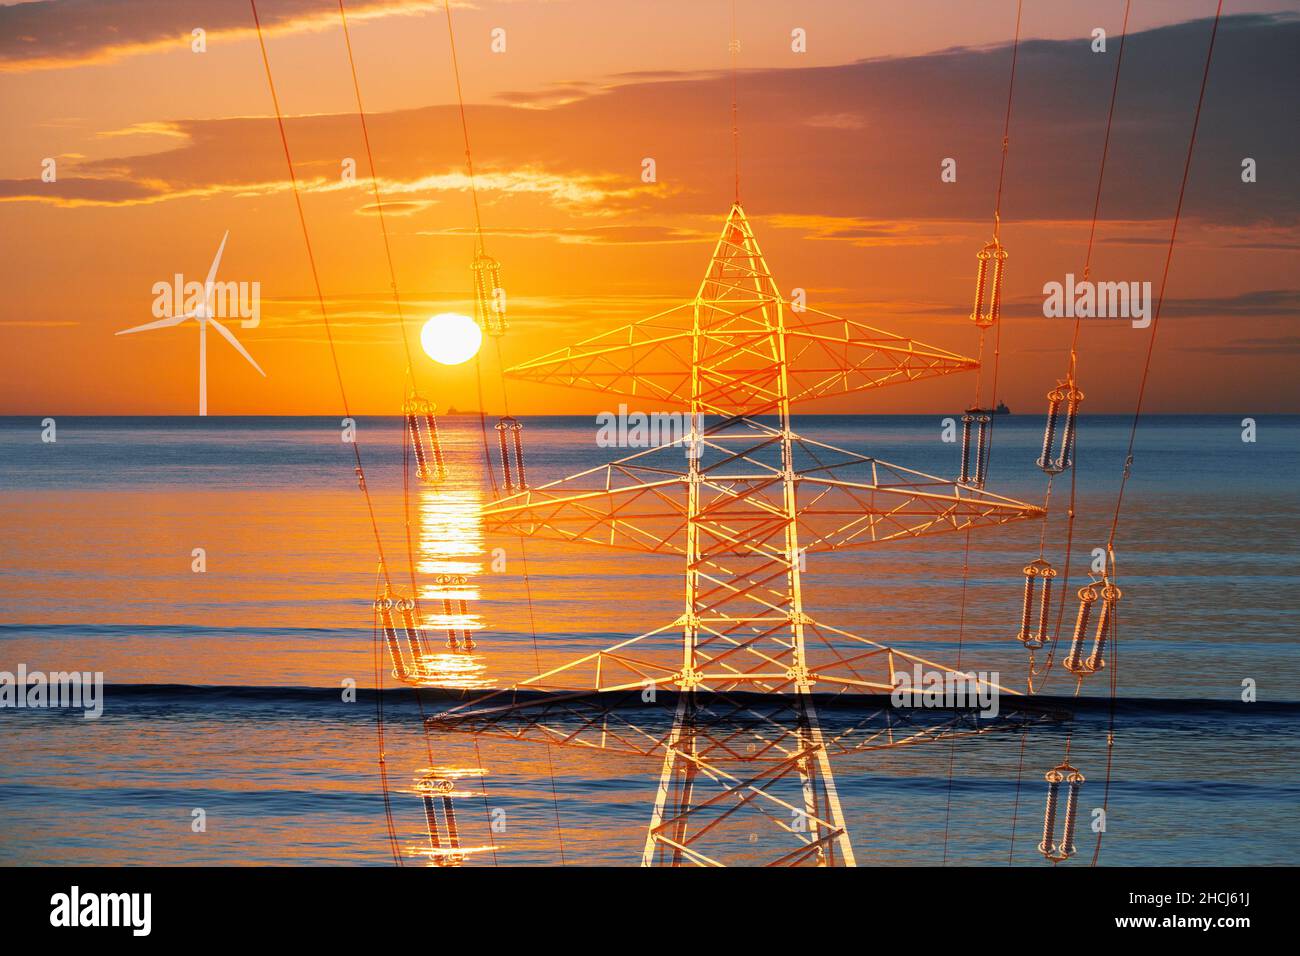 Clean, renewable energy concept. Electricity pylon, offshore wind turbine, sunrise, solar energy, net zero 2050 Stock Photo